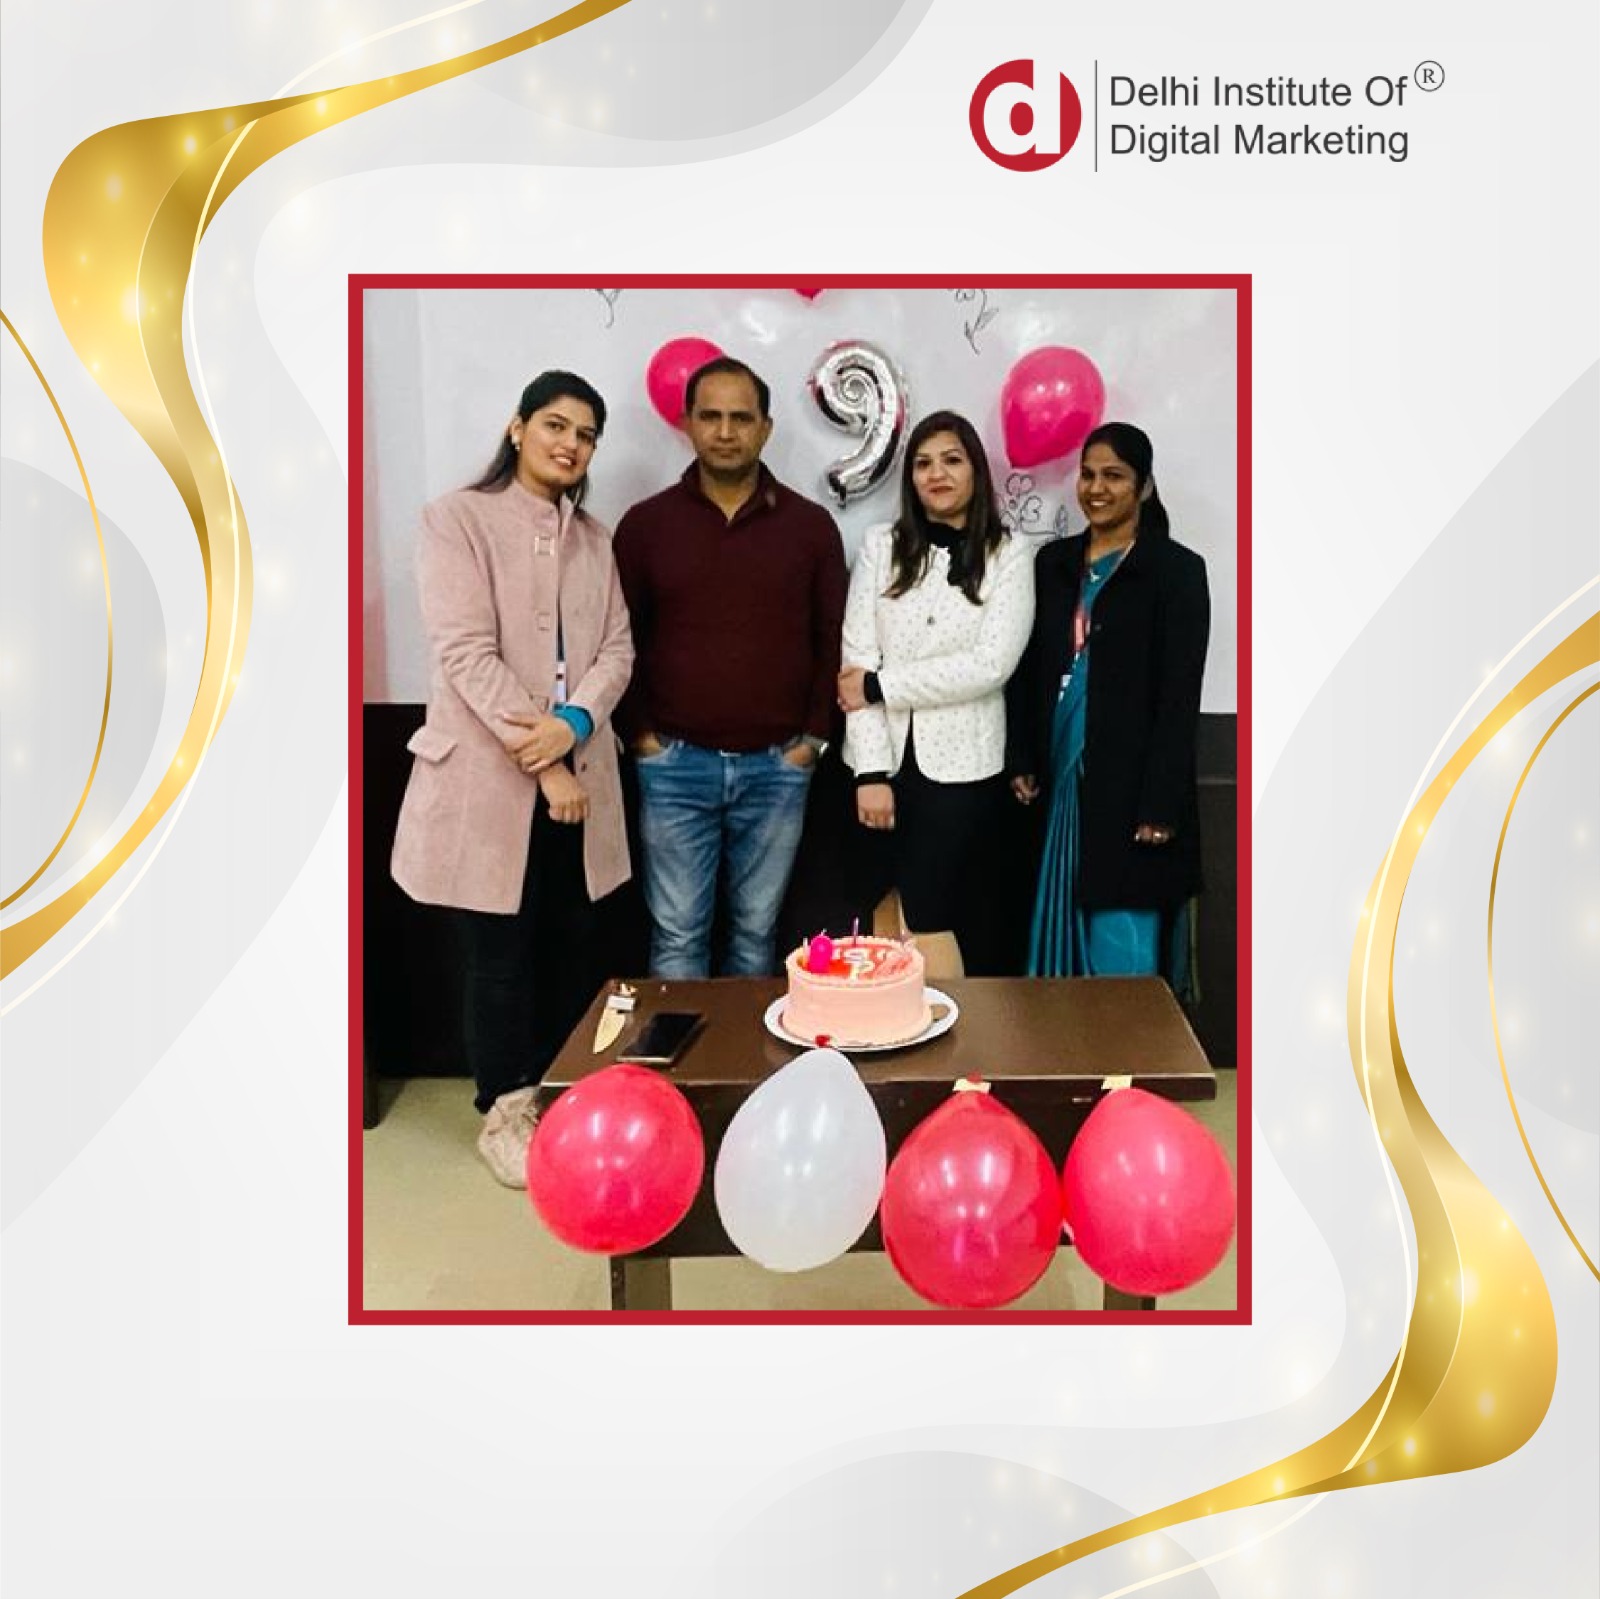 DIDM’s Satya Niketan Branch Celebrates 9th Anniversary